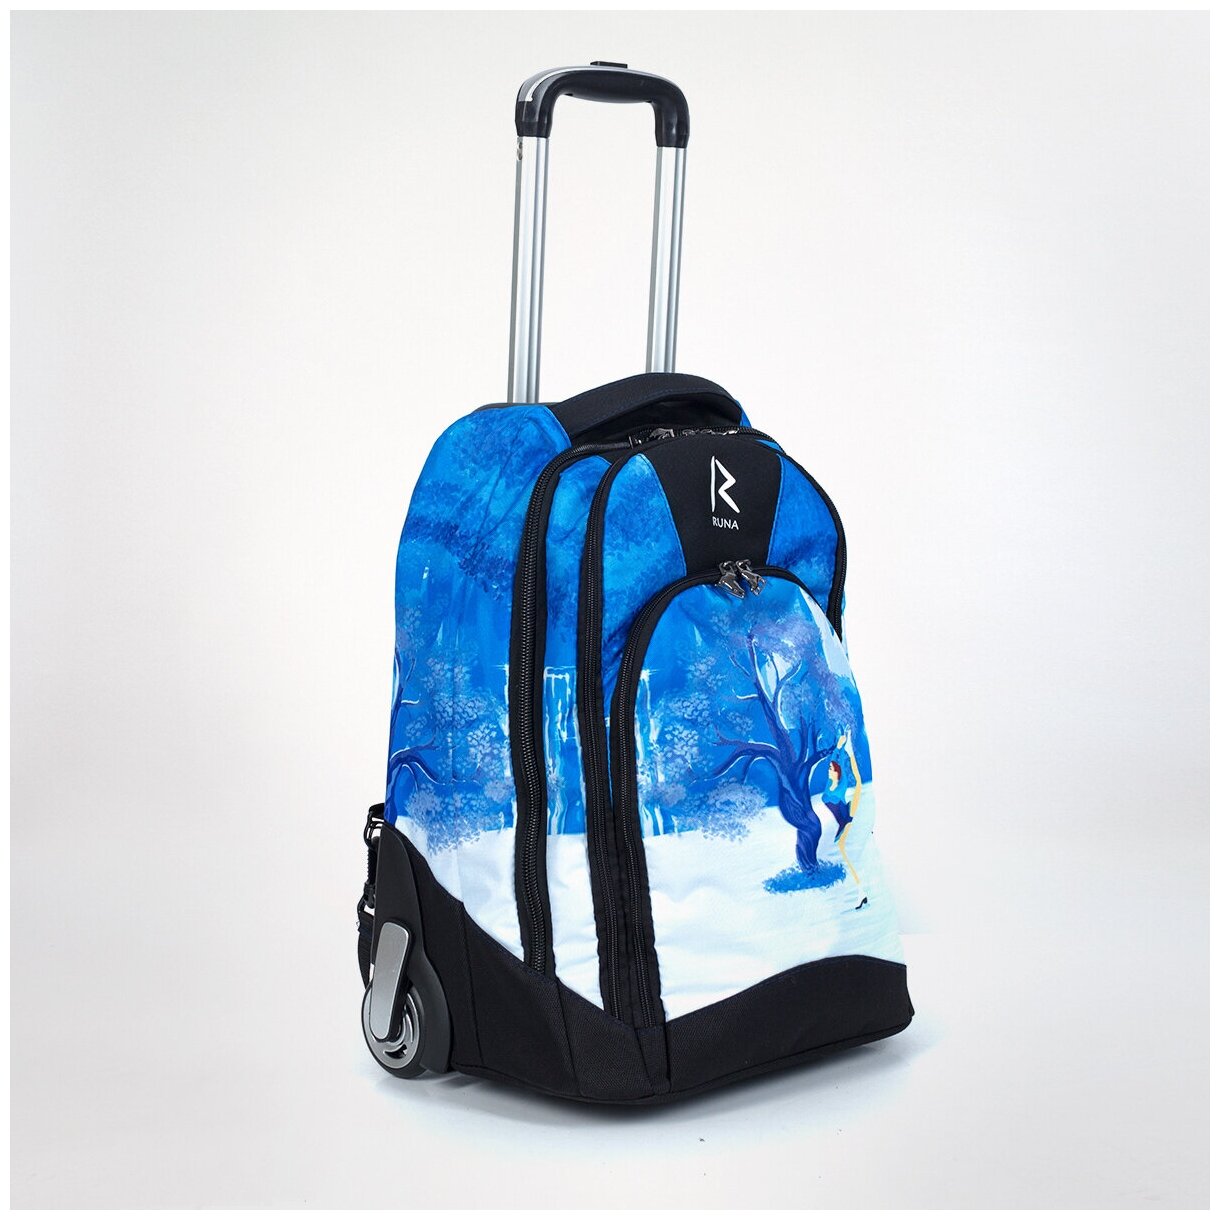 Сумка-рюкзак на колесиках "RUNA", Зимний сад Blue - фотография № 1